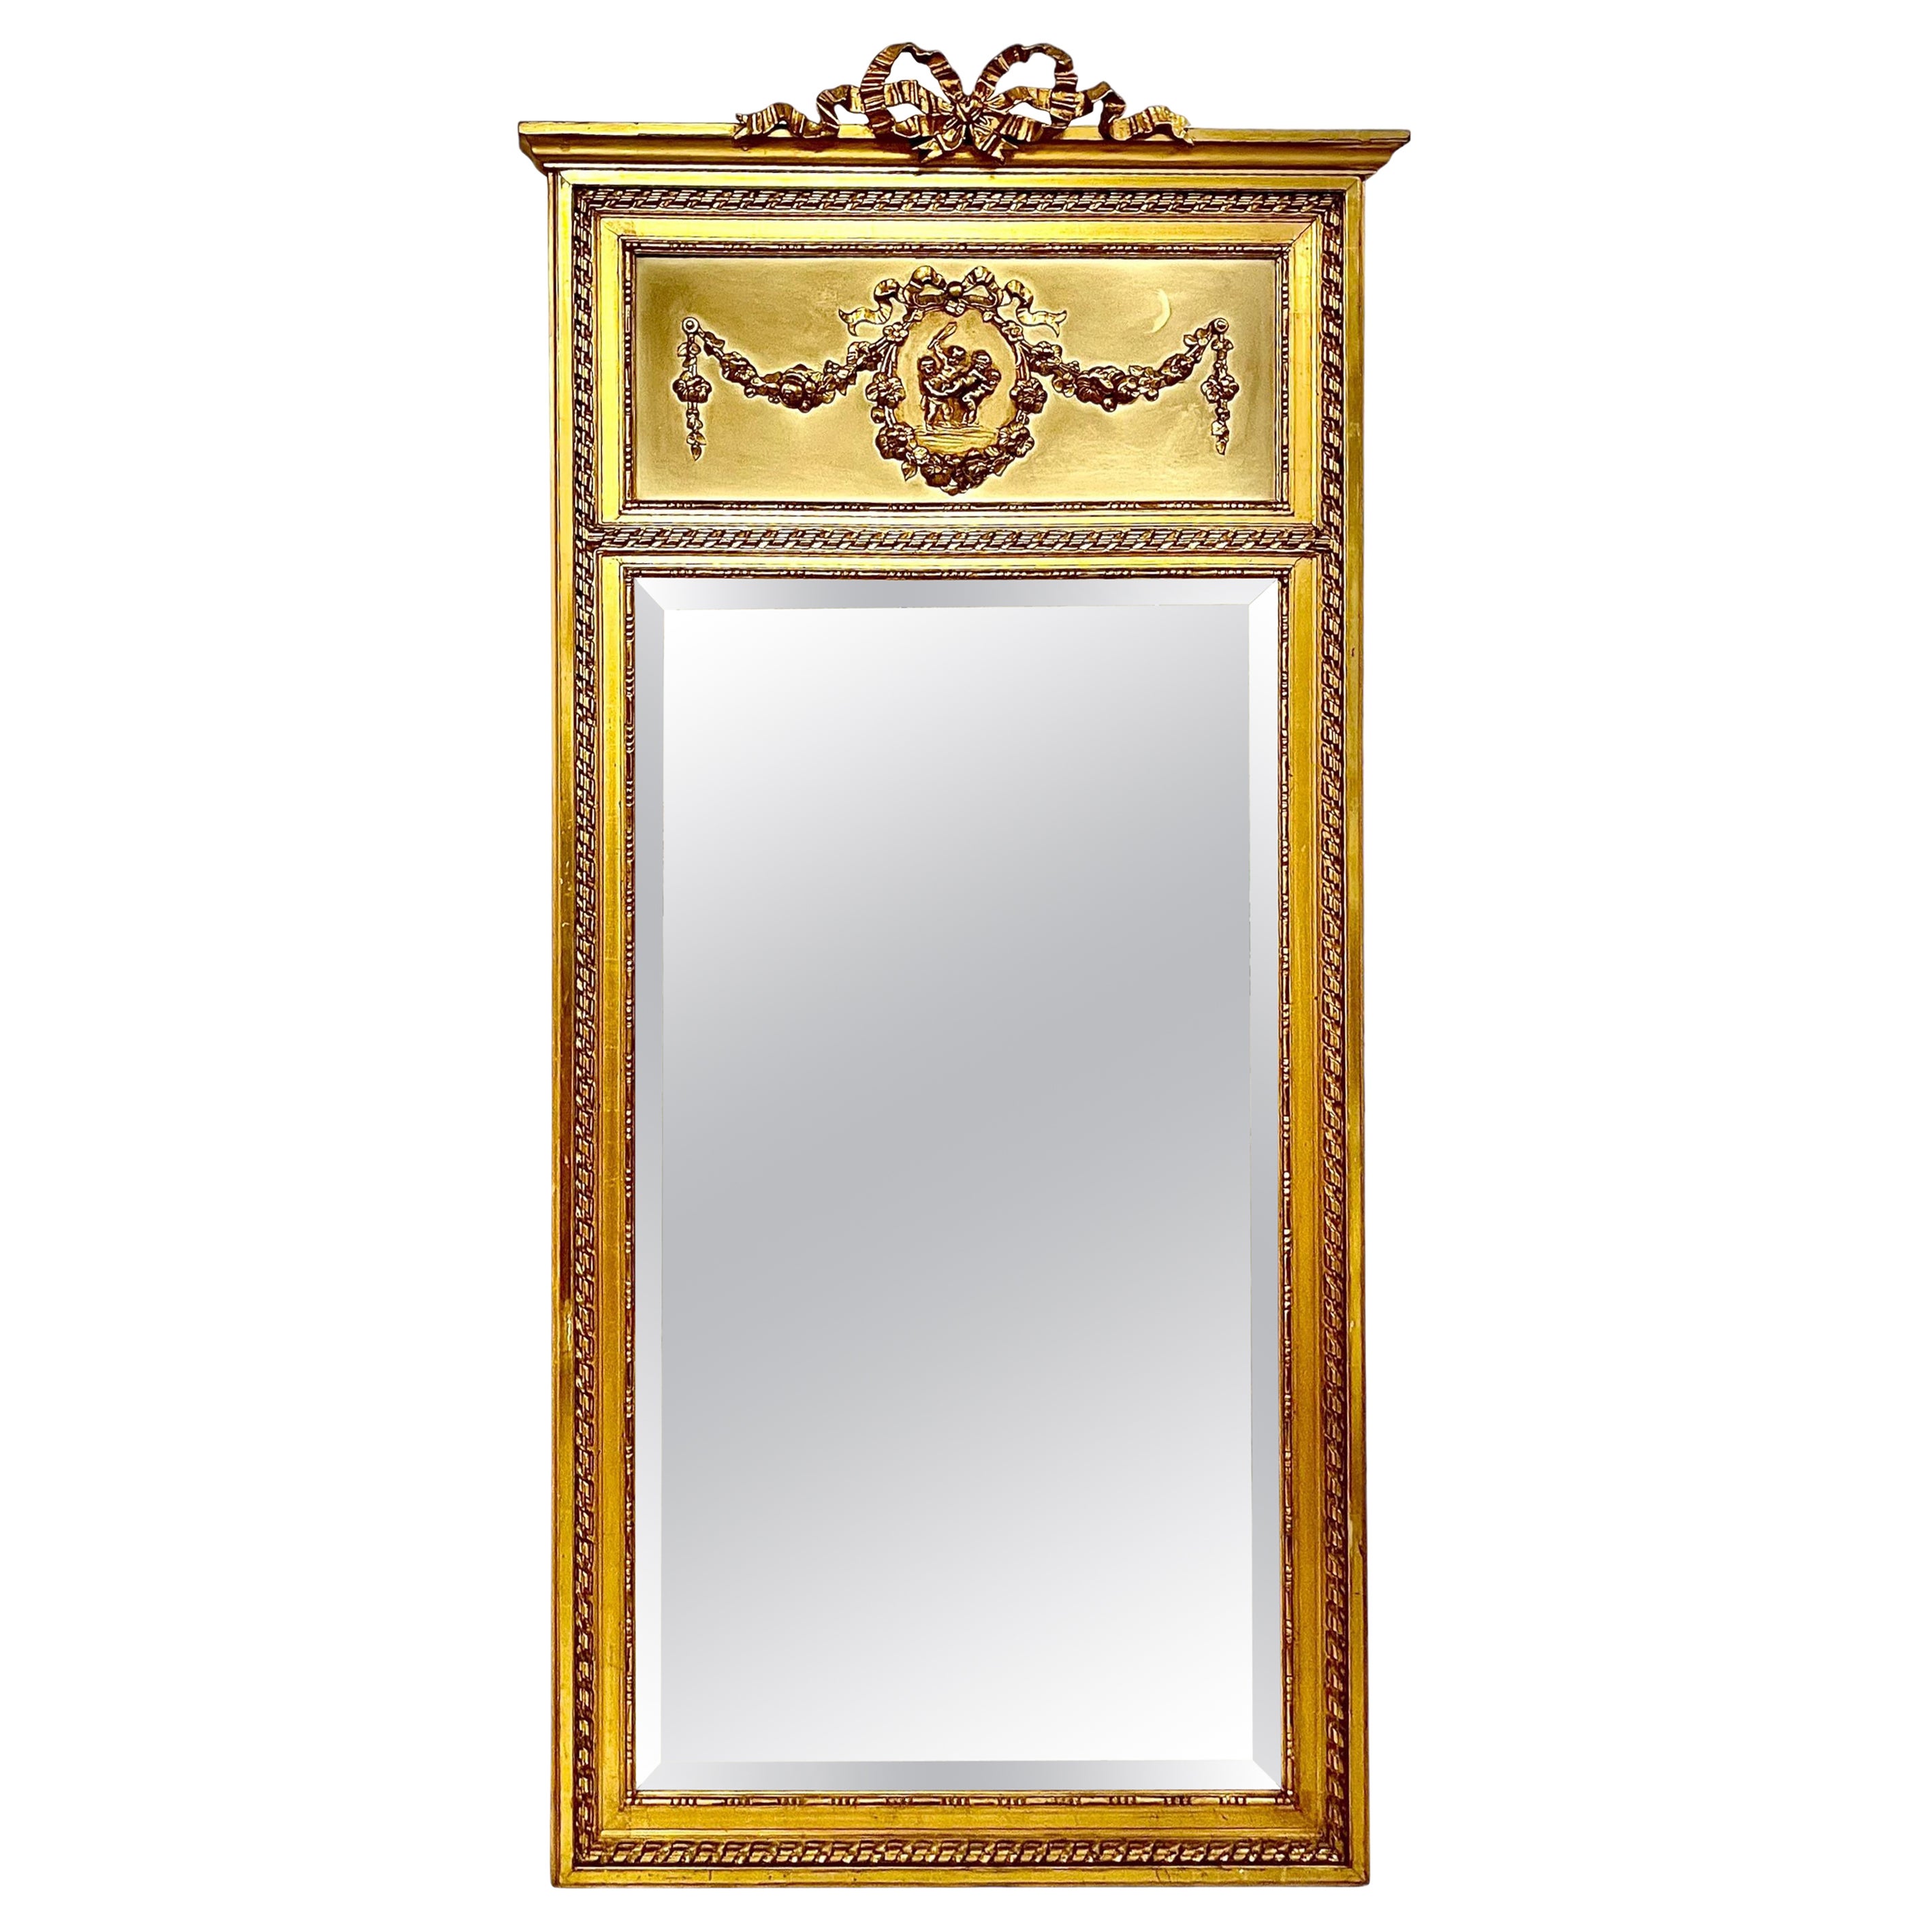  19th Century Louis XVI Trumeau Gilded Mirror with Mischievous Cherubs Design For Sale